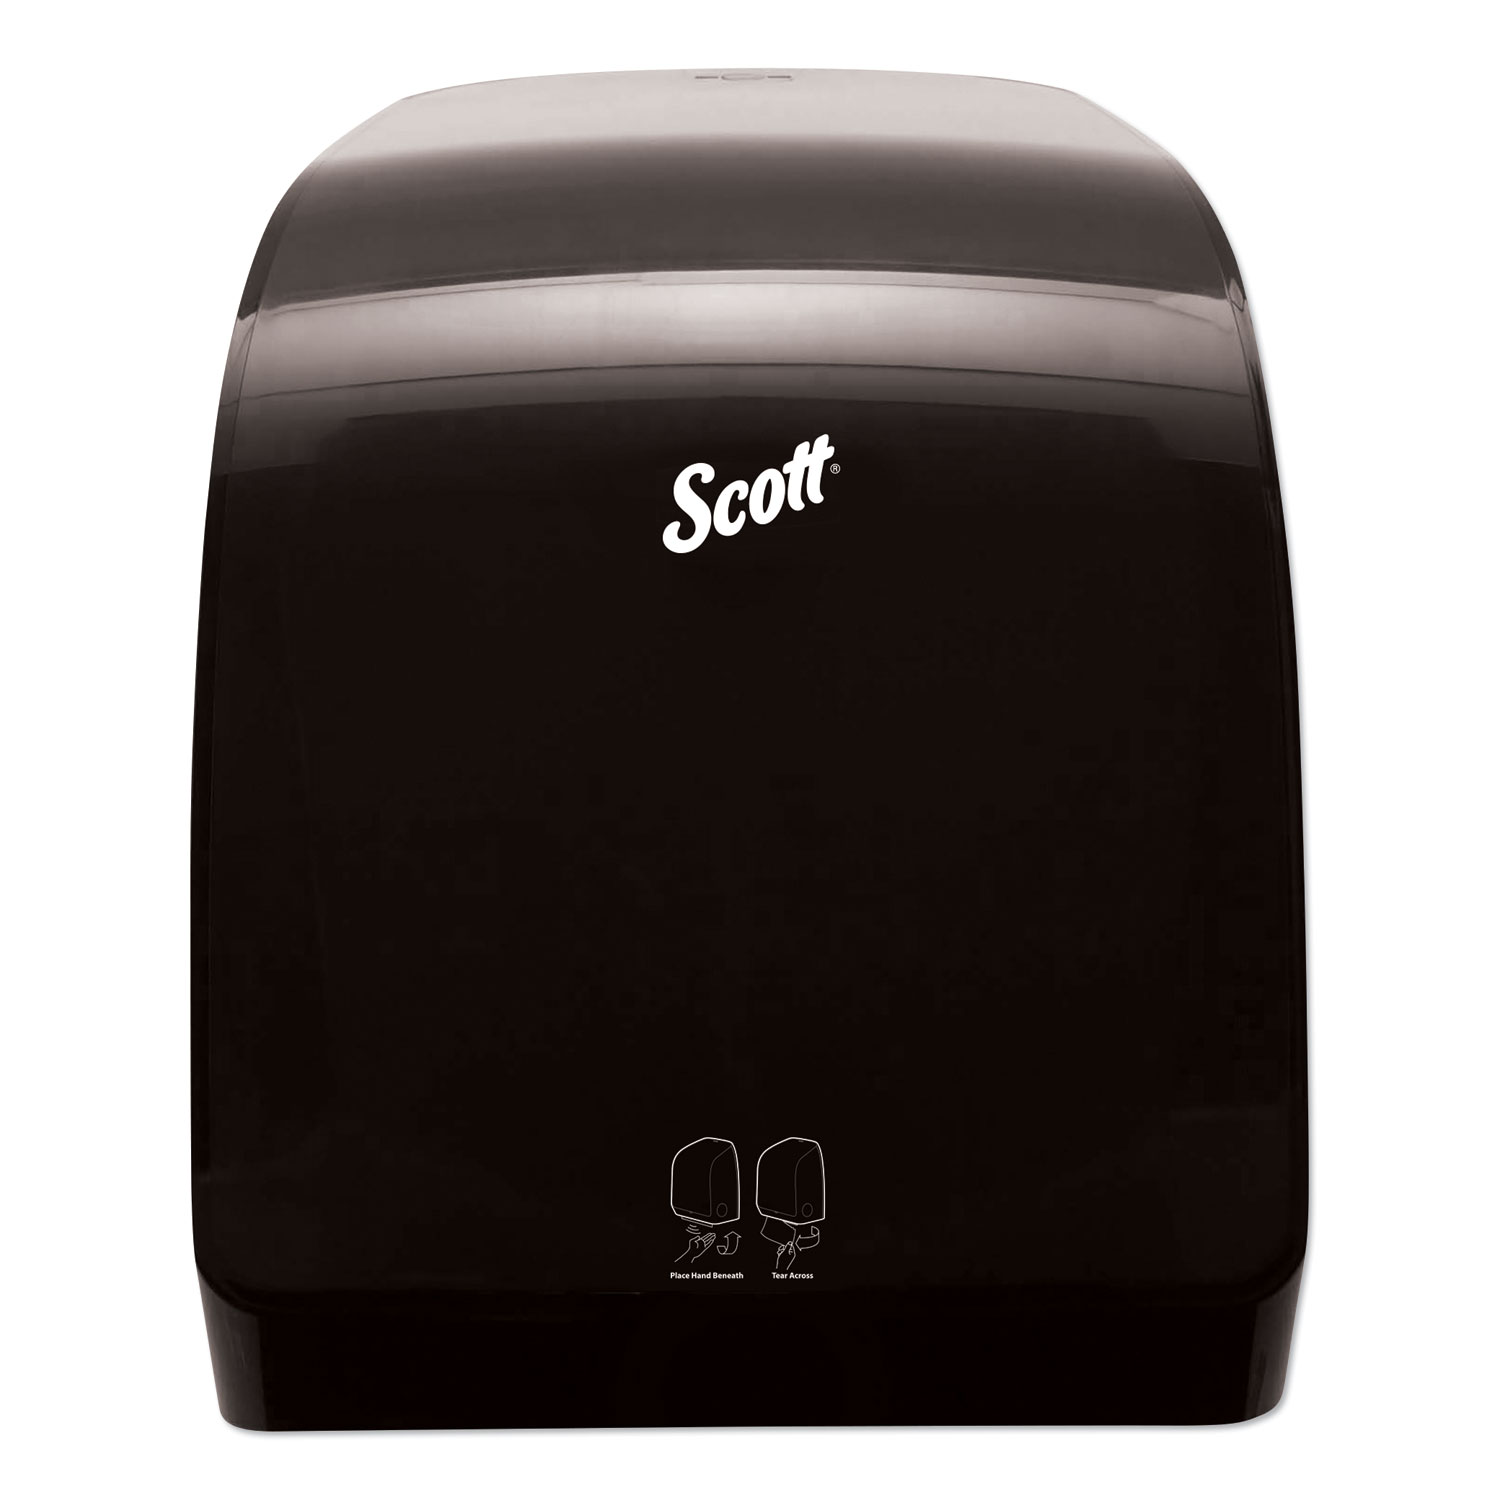  Scott KCC 34348 Pro Electronic Hard Roll Towel Dispenser, 12.66 x 9.18 x 16.44, Smoke (KCC34348) 